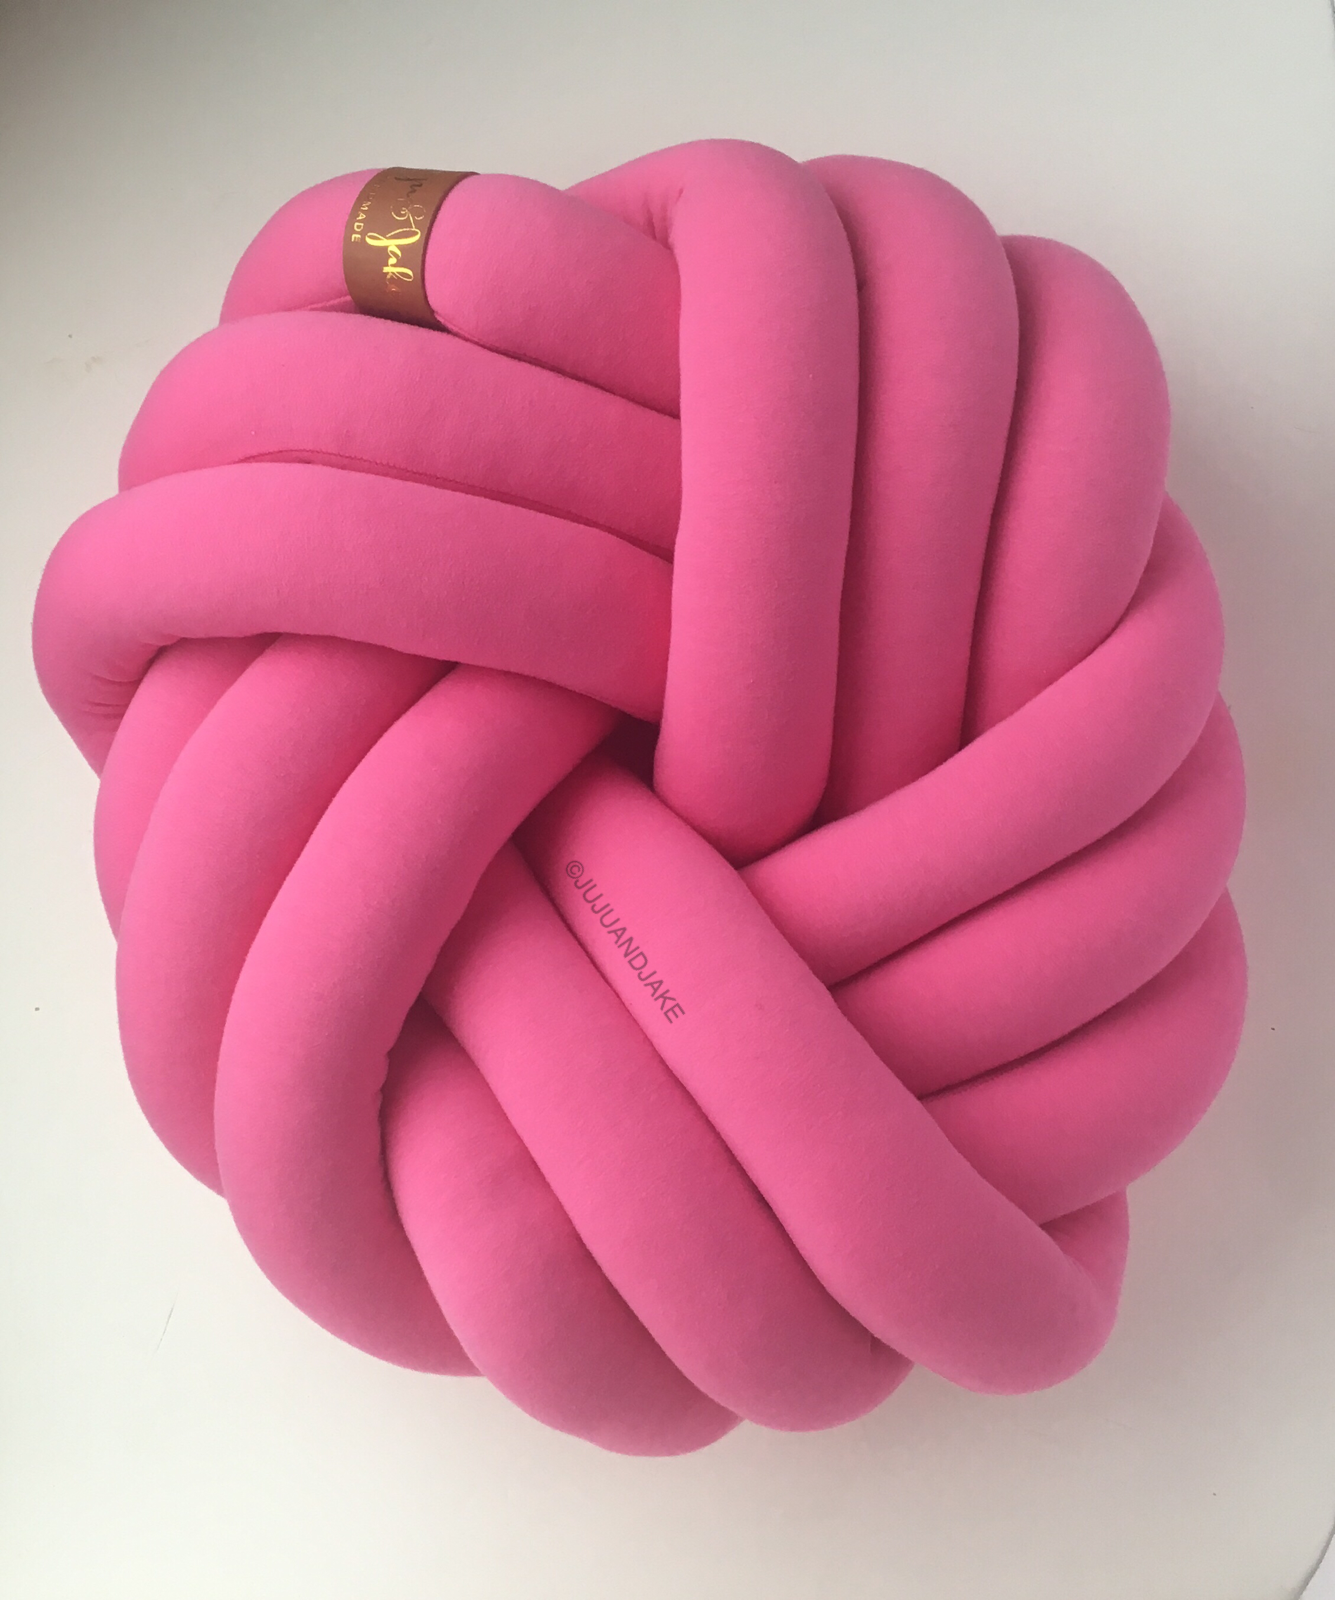 Hibiscus | Kids Floor Knot Cushion / Floor Pillow - See more Kids Knot Pillows & Cushions at JujuAndJake.com